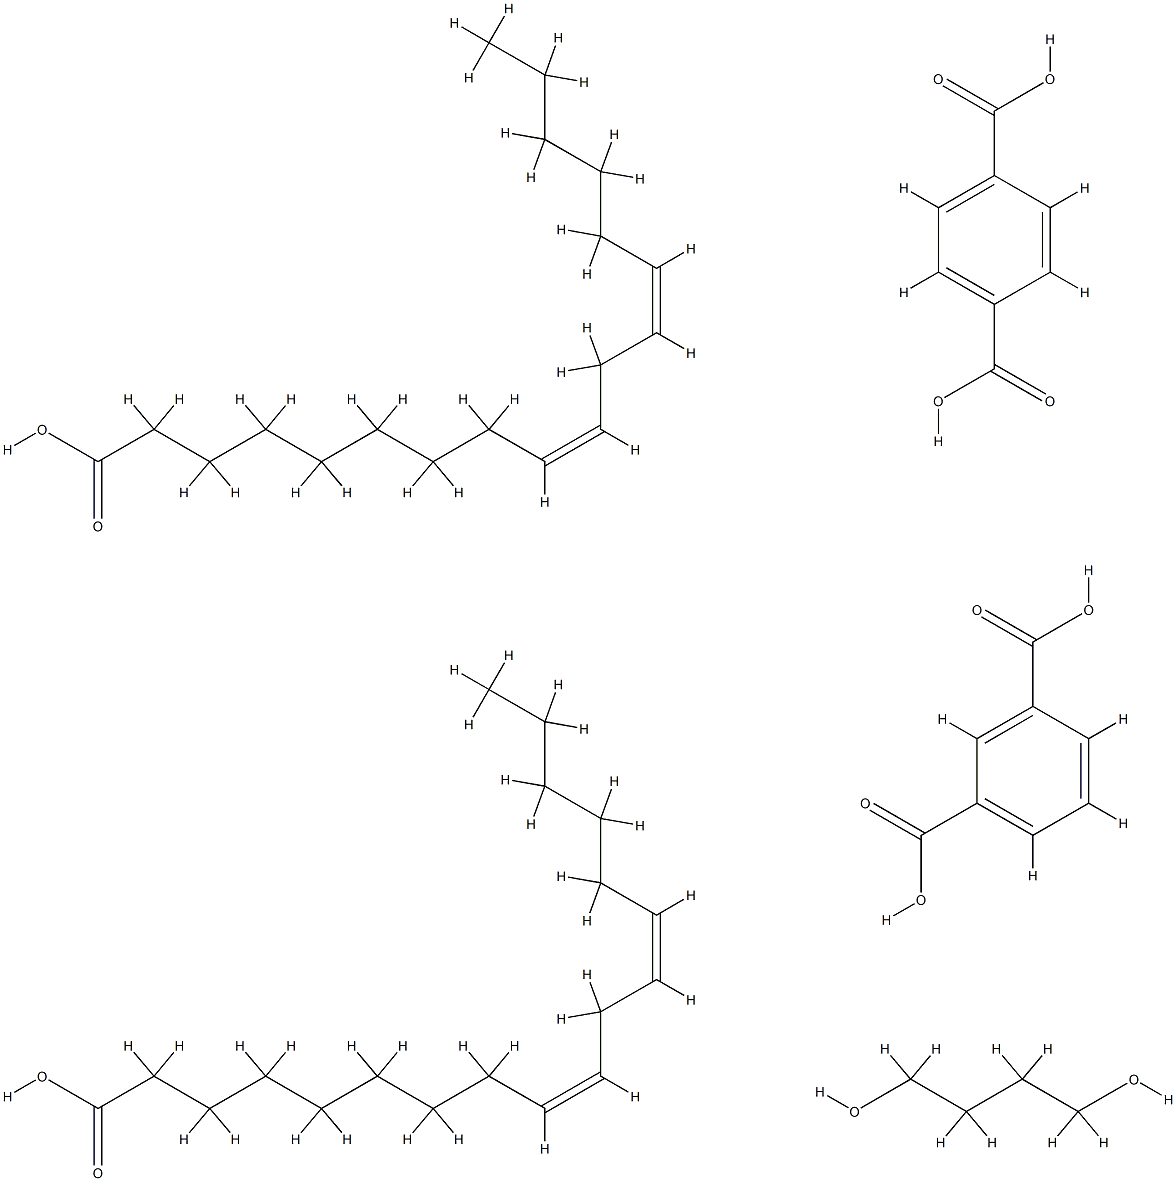 68123-22-8 1,3-Benzenedicarboxylic acid, polymer with 1,4-benzenedicarboxylic acid, 1,4-butanediol and (Z,Z)-9,12-octadecadienoic acid dimer